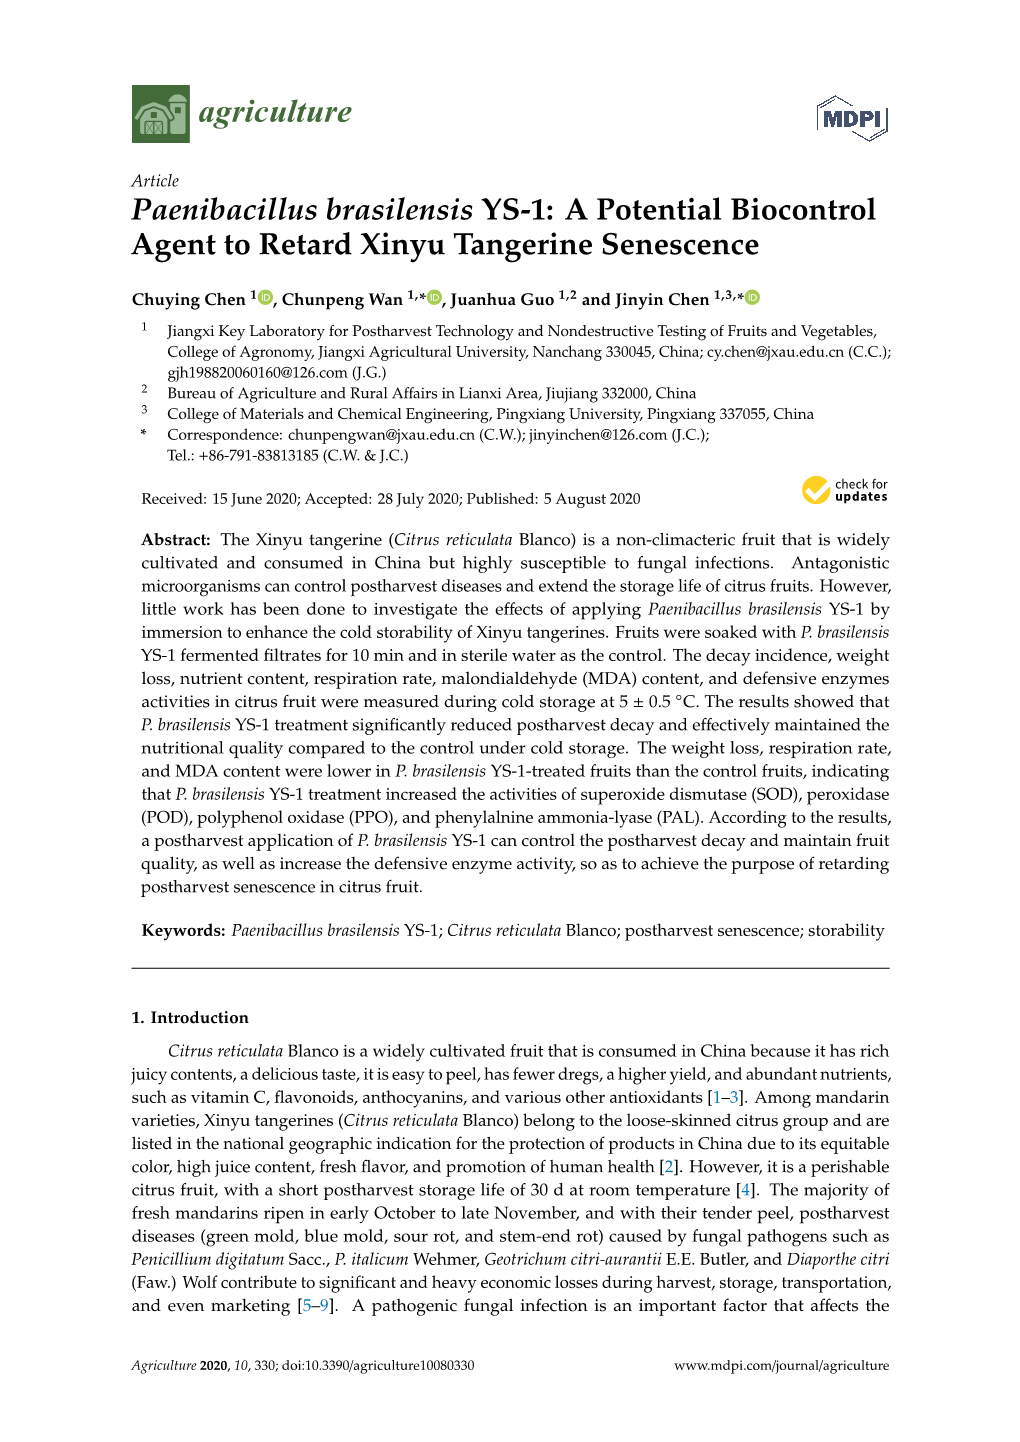 Paenibacillus Brasilensis YS-1: a Potential Biocontrol Agent to Retard Xinyu Tangerine Senescence